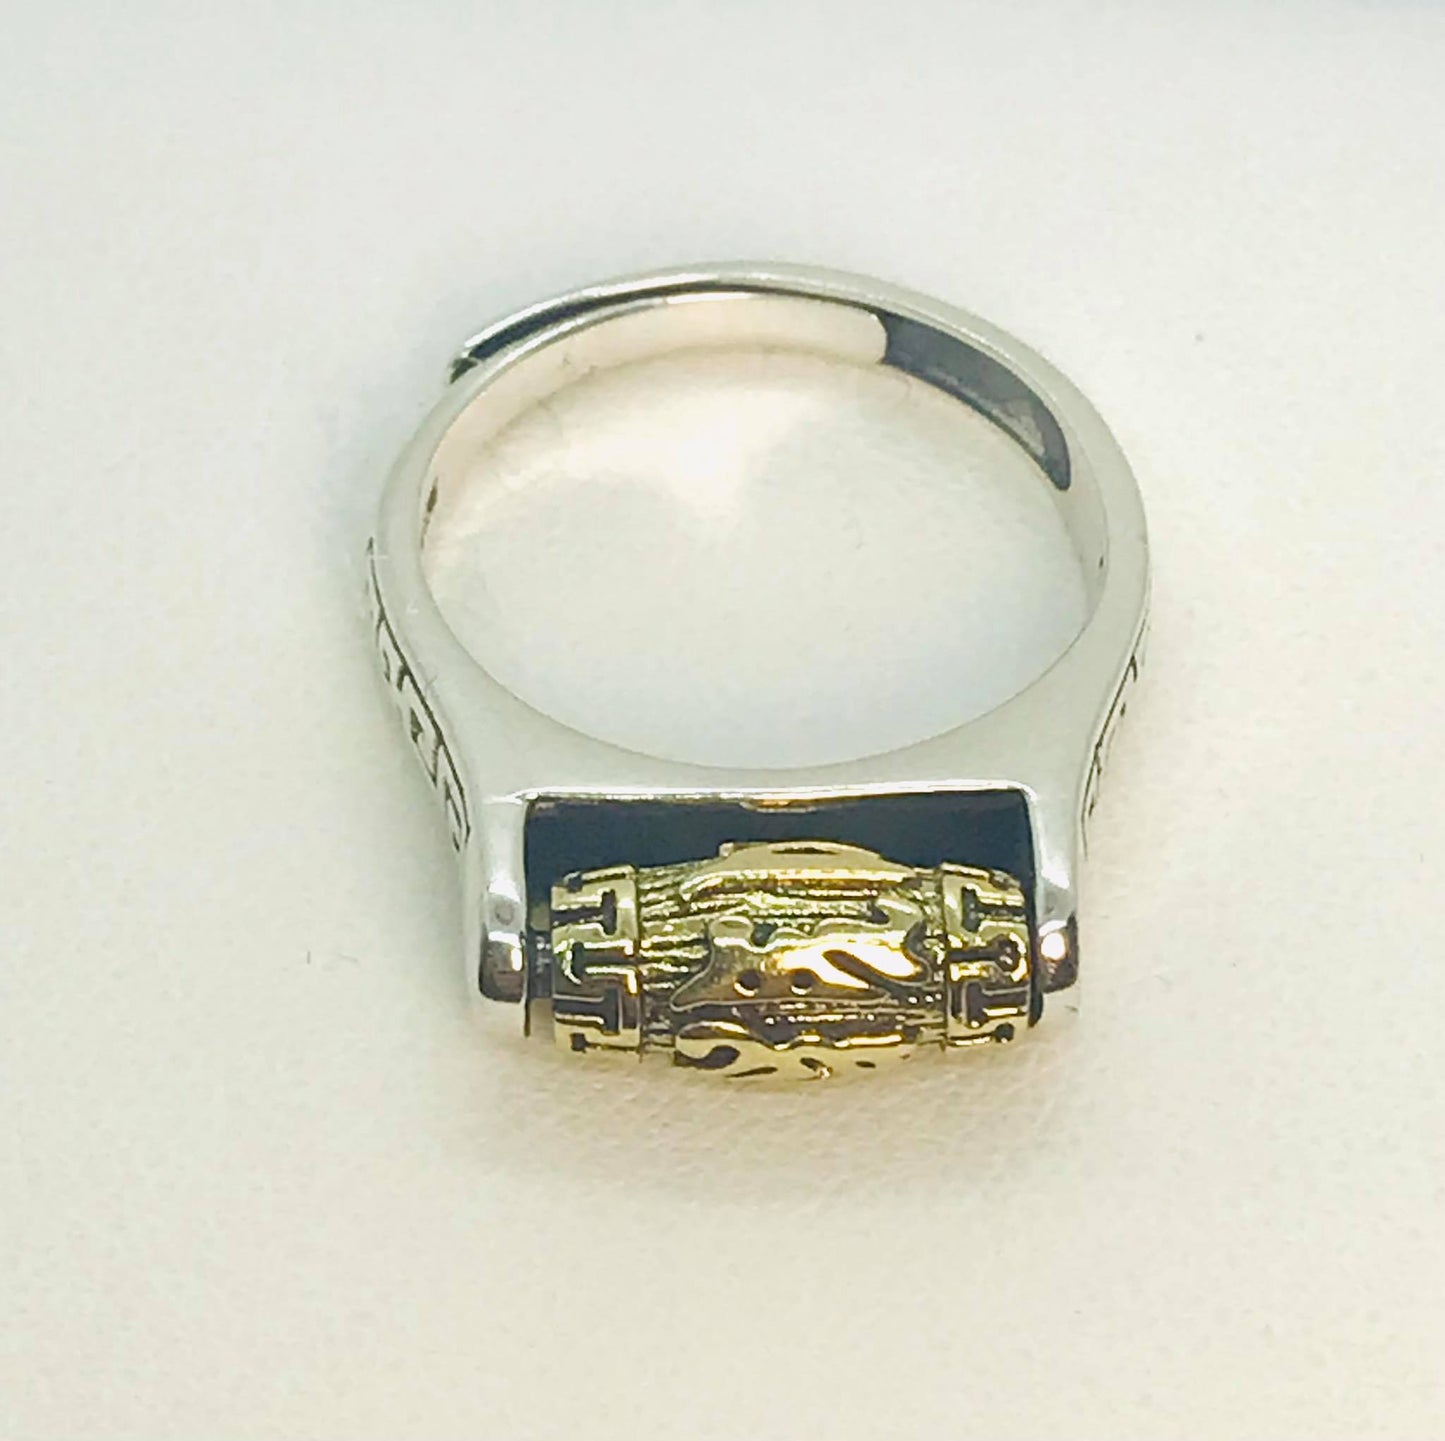 Tibetan Prayer Ring - Sterling Silver - Resizeable